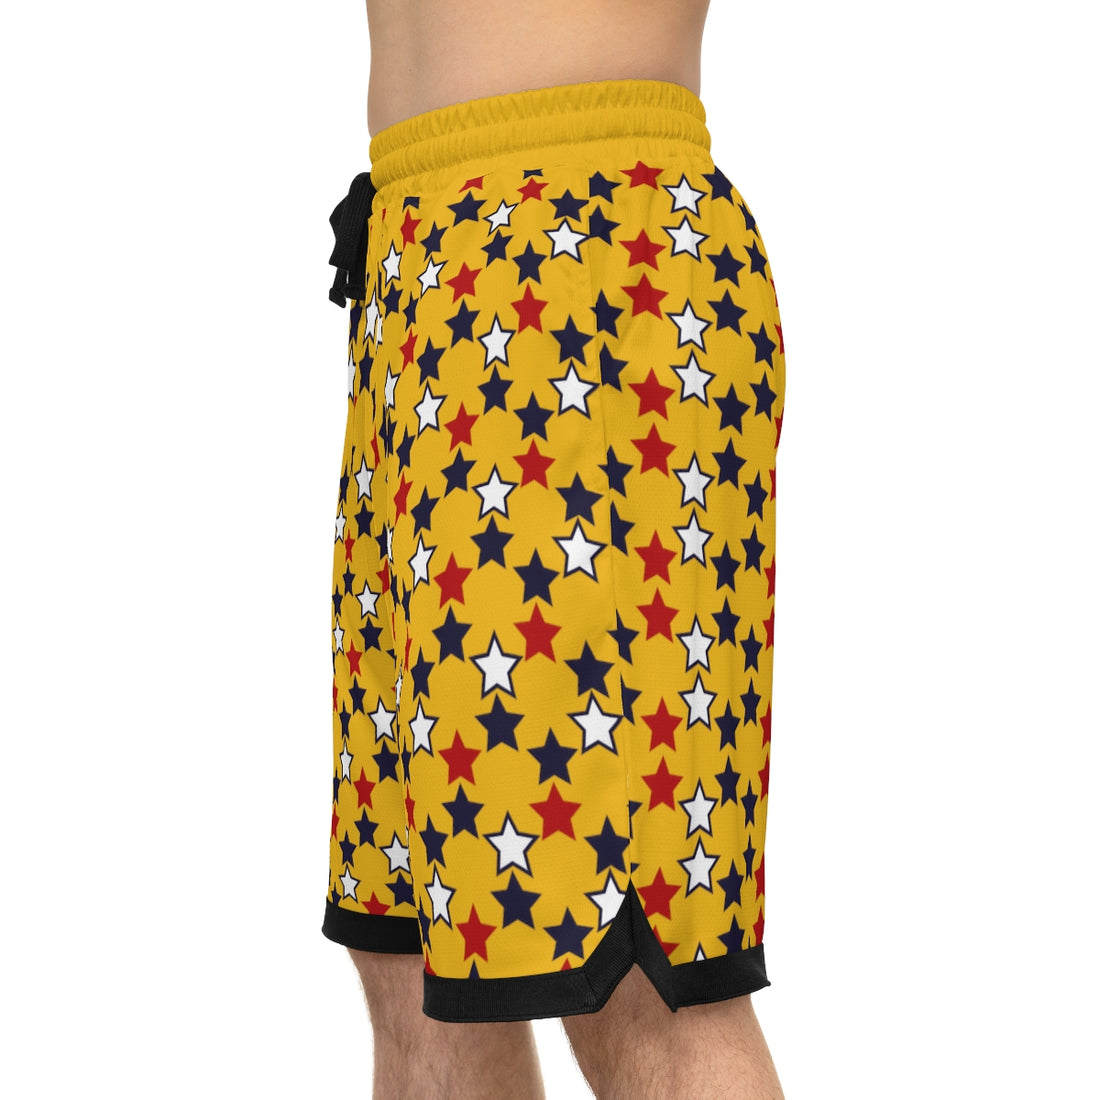 yellow star print basketball shorts for men